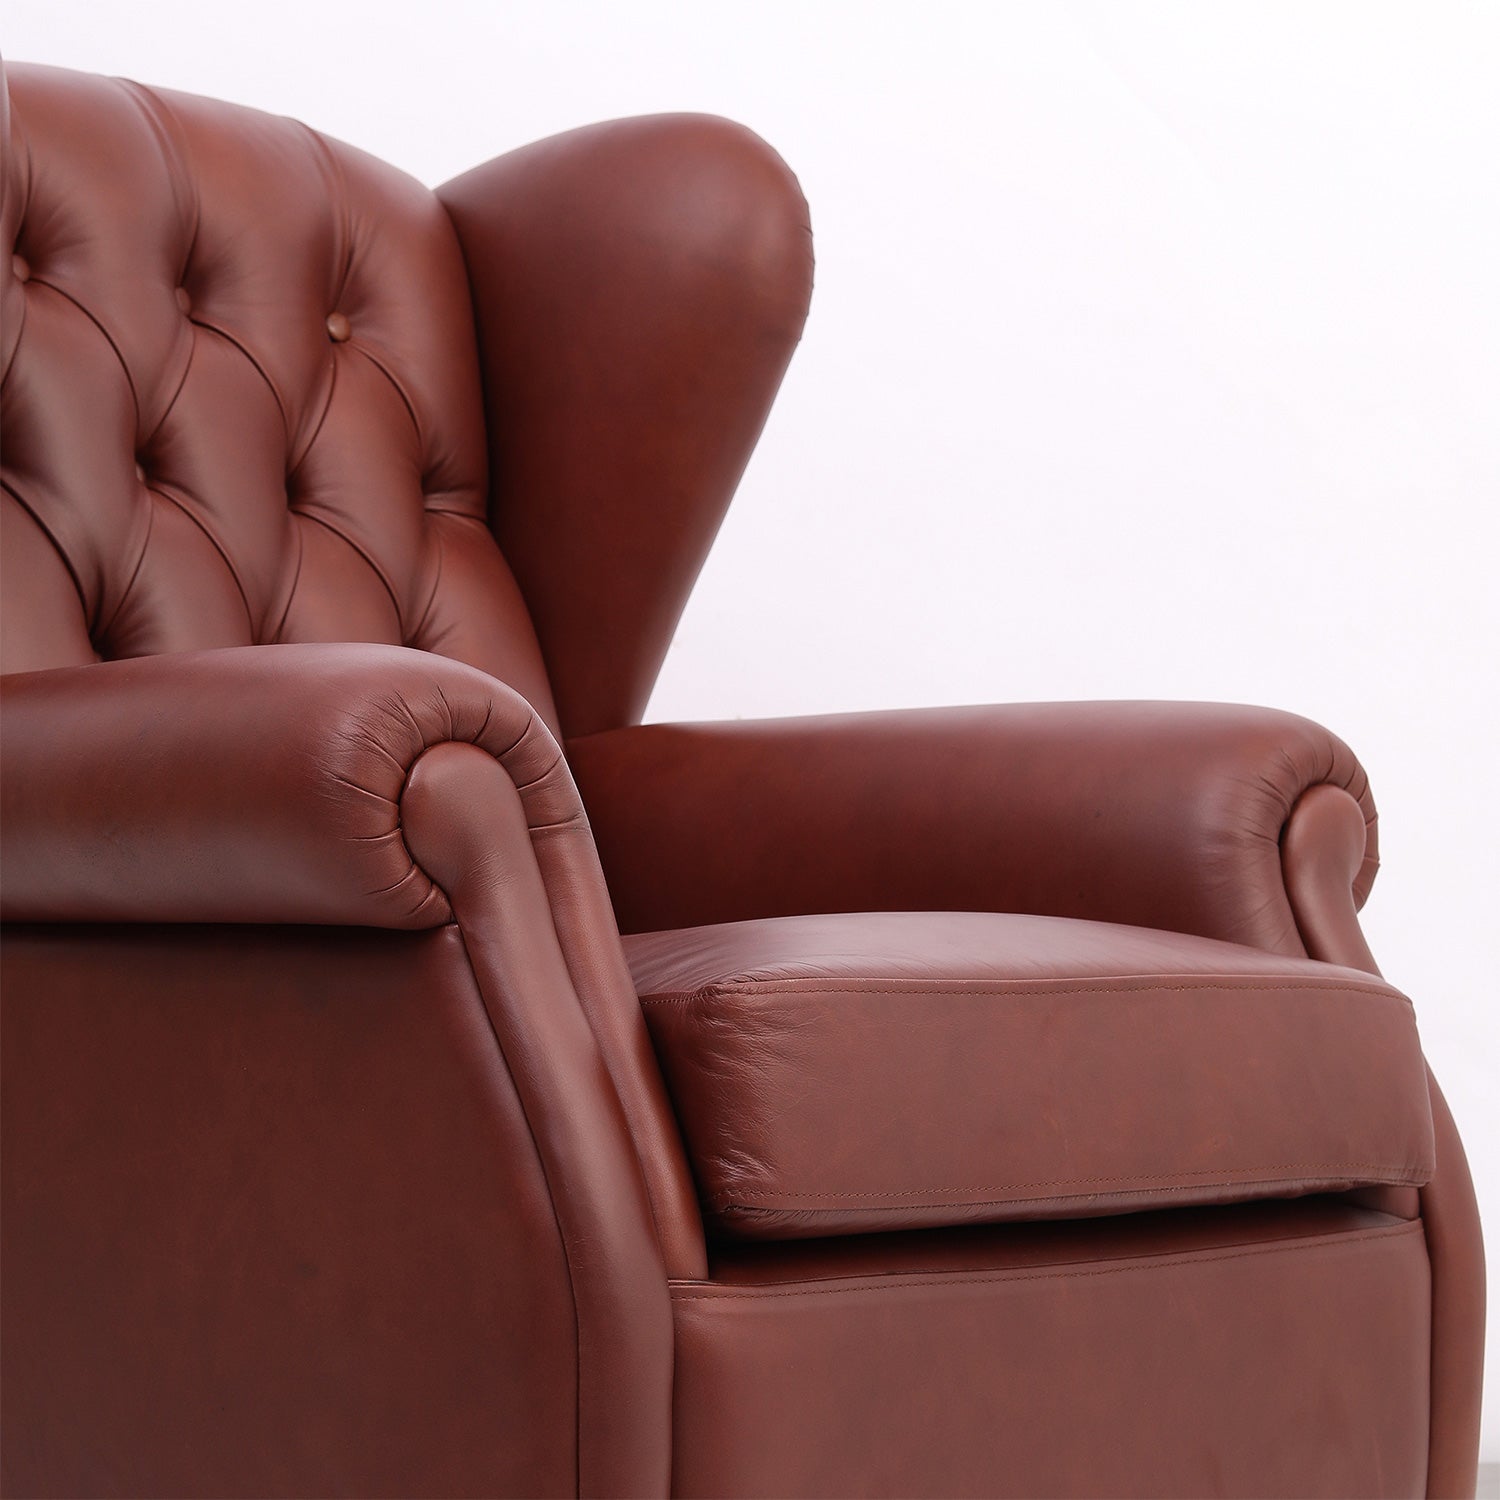 Hugo Leather Chair Side Angle Close Up